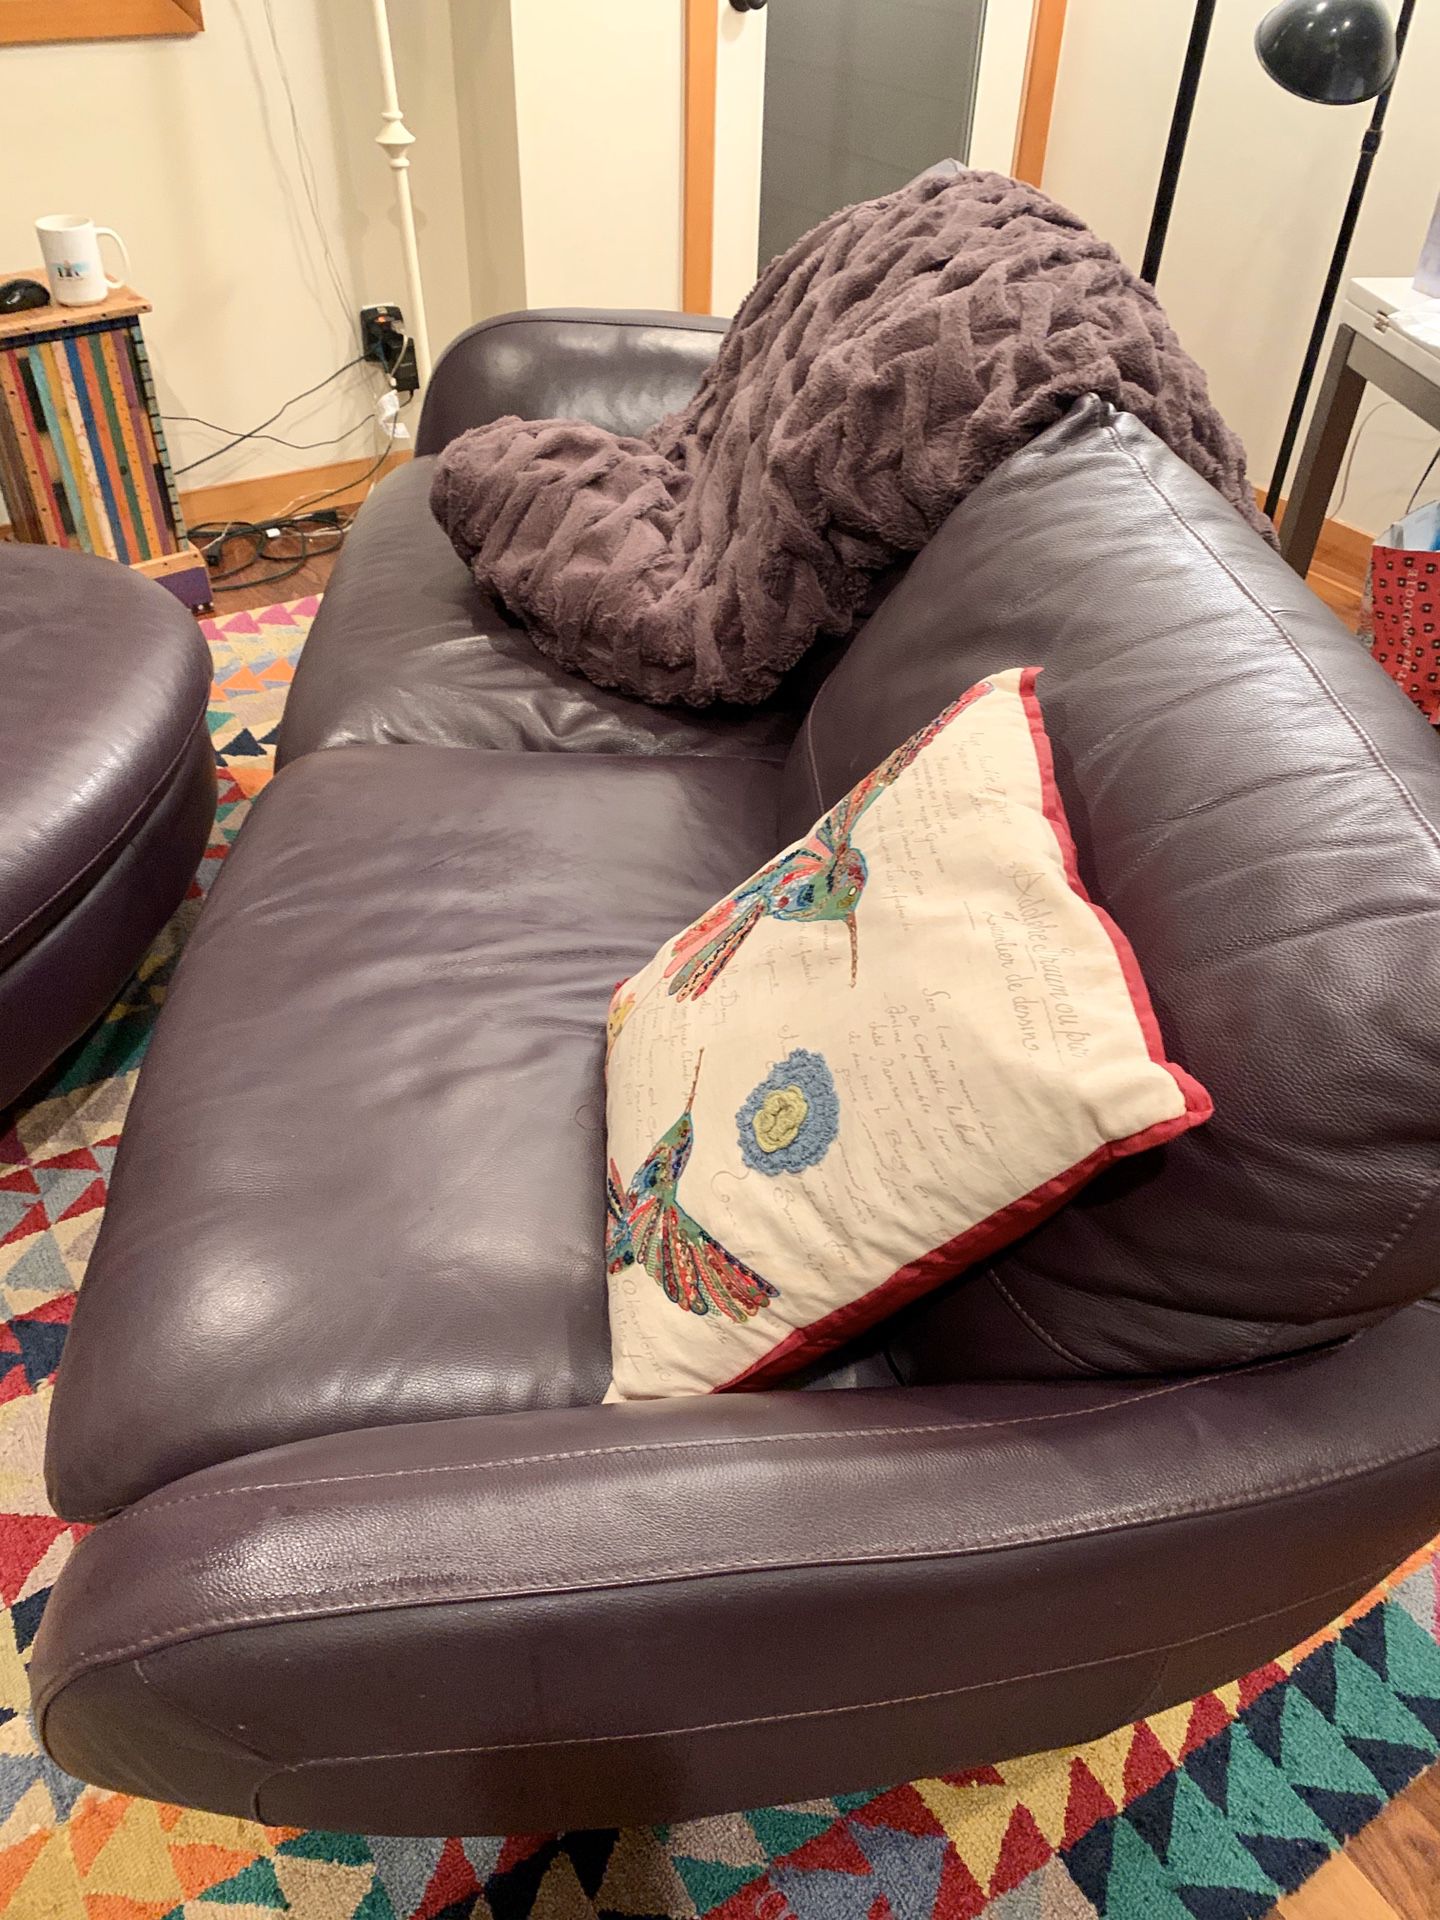 Leather sofa and ottoman